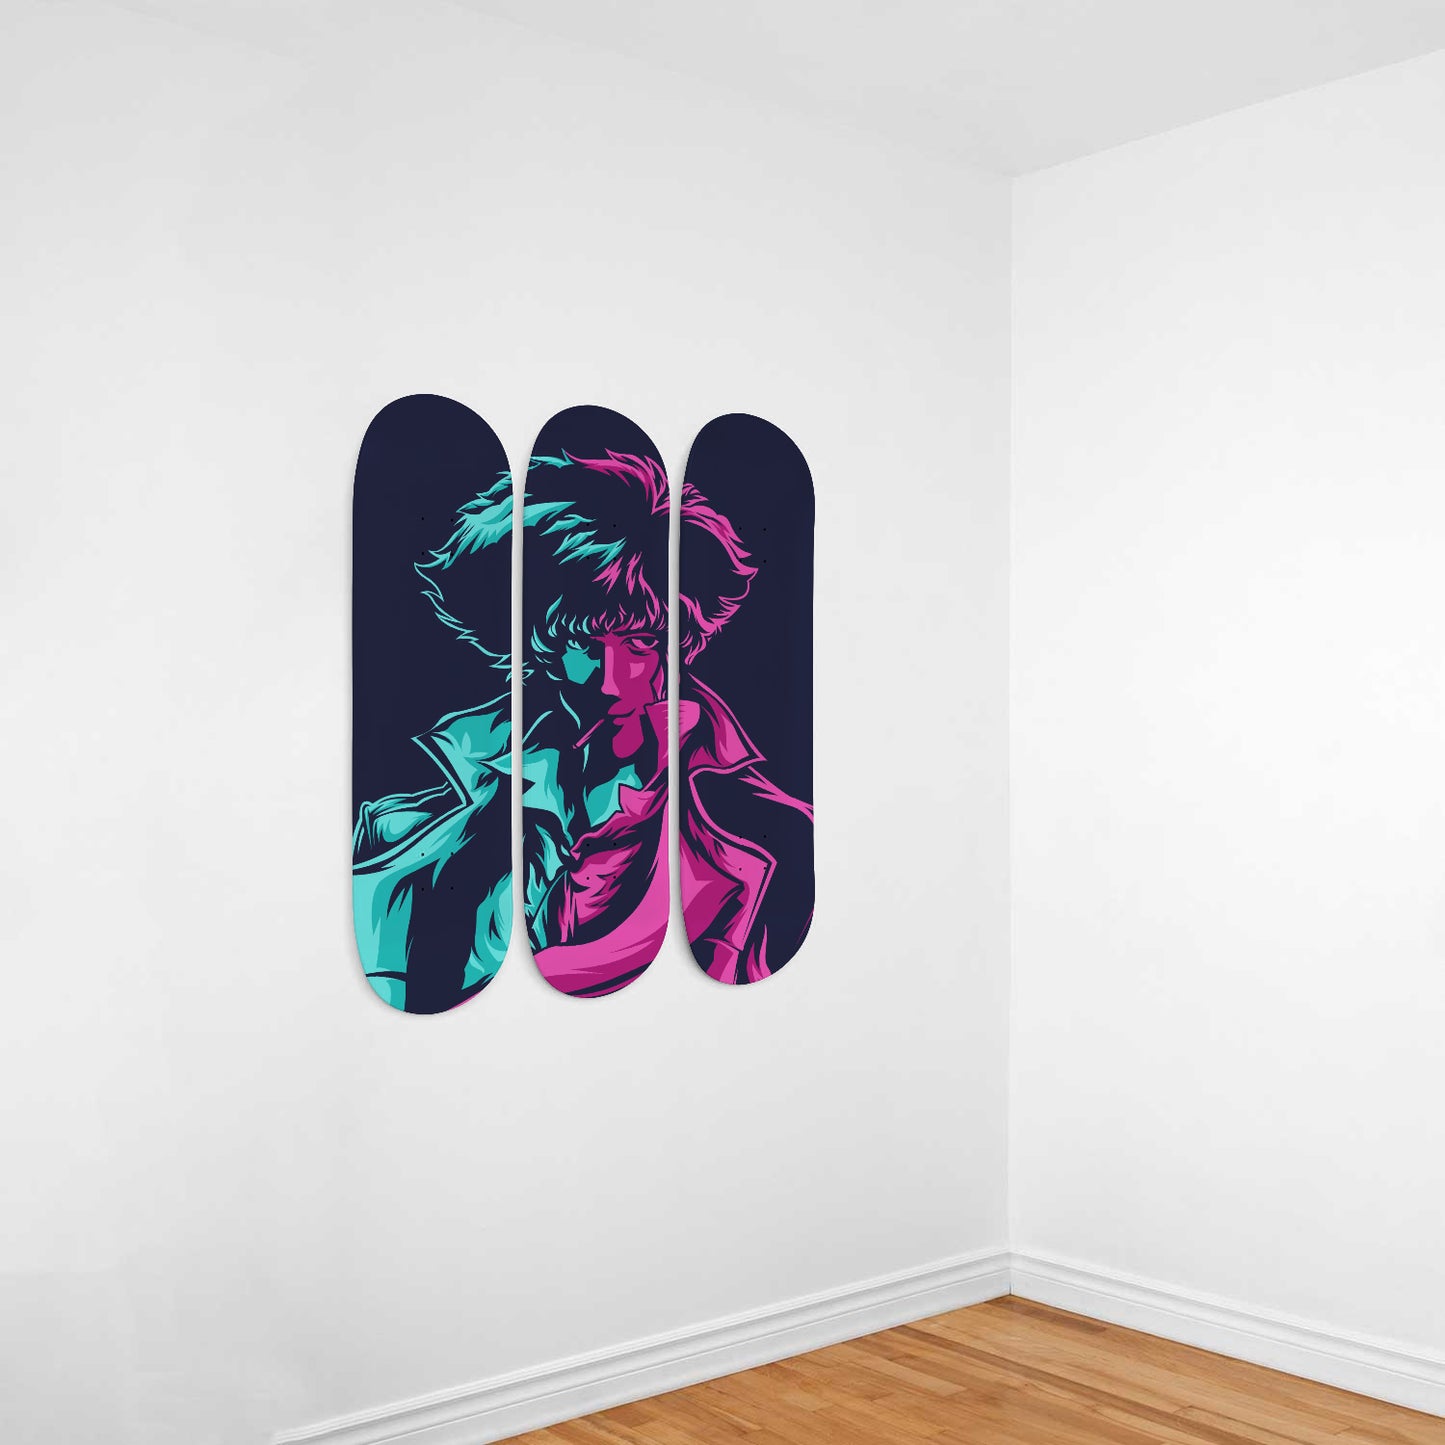 Spike Spiegel With Cigarette | Wall Art -Cowboy Bebop Inspired | Japanese Neo-Noir Science Fiction Anime Series Inspired | 3 Piece Skateboard Wall Art, Deck Art | Wall Hanging Decor | Custom Painted Wall Art